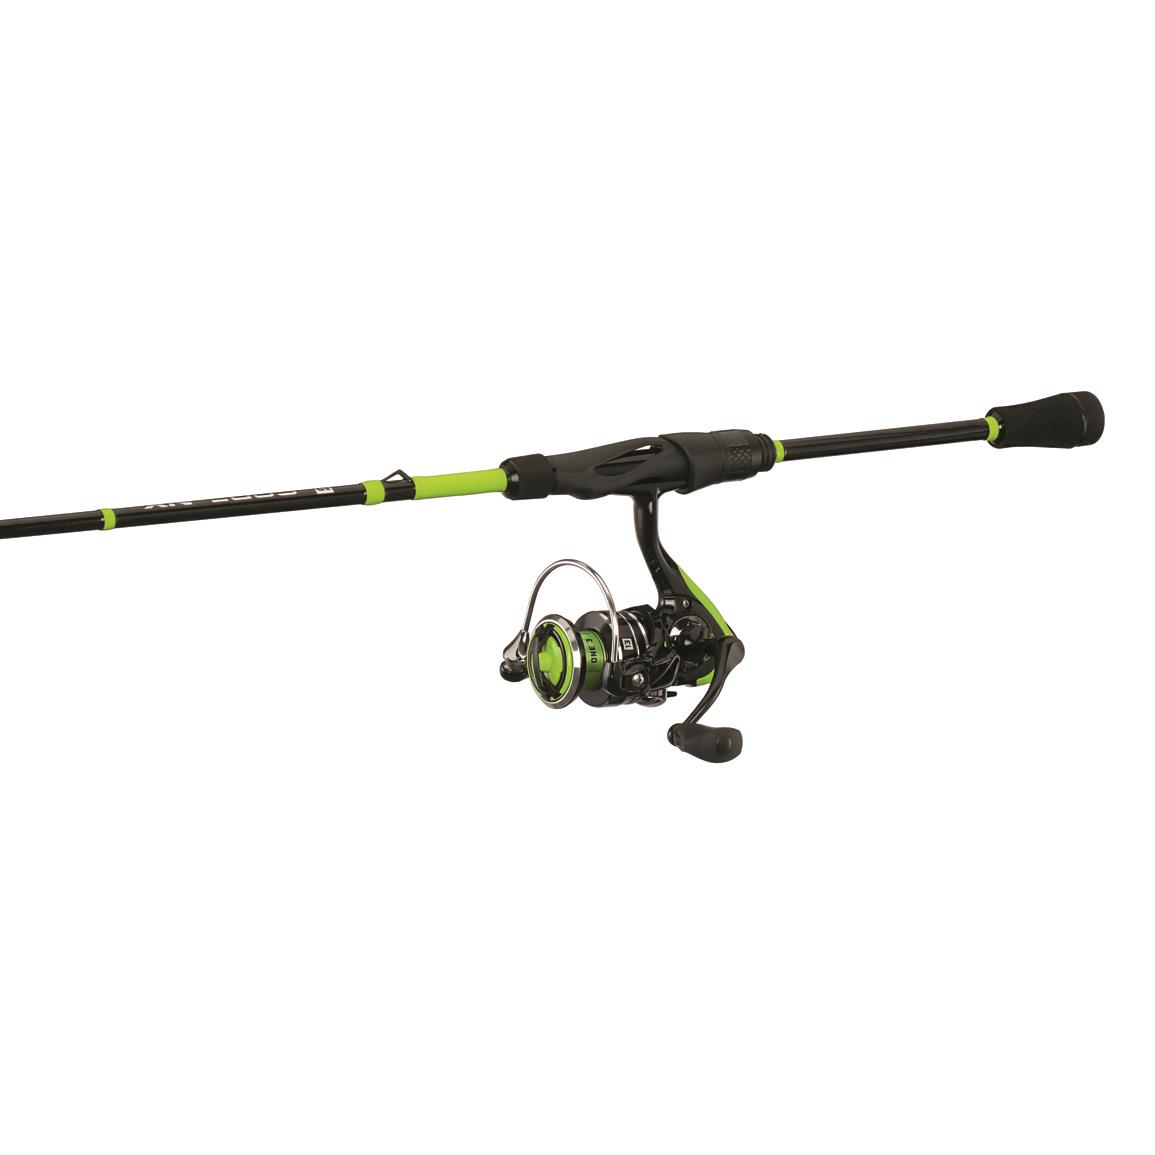 13 Fishing Code NX Spinning Combo, 7'1 Length, Medium Power, 3000 Reel Size